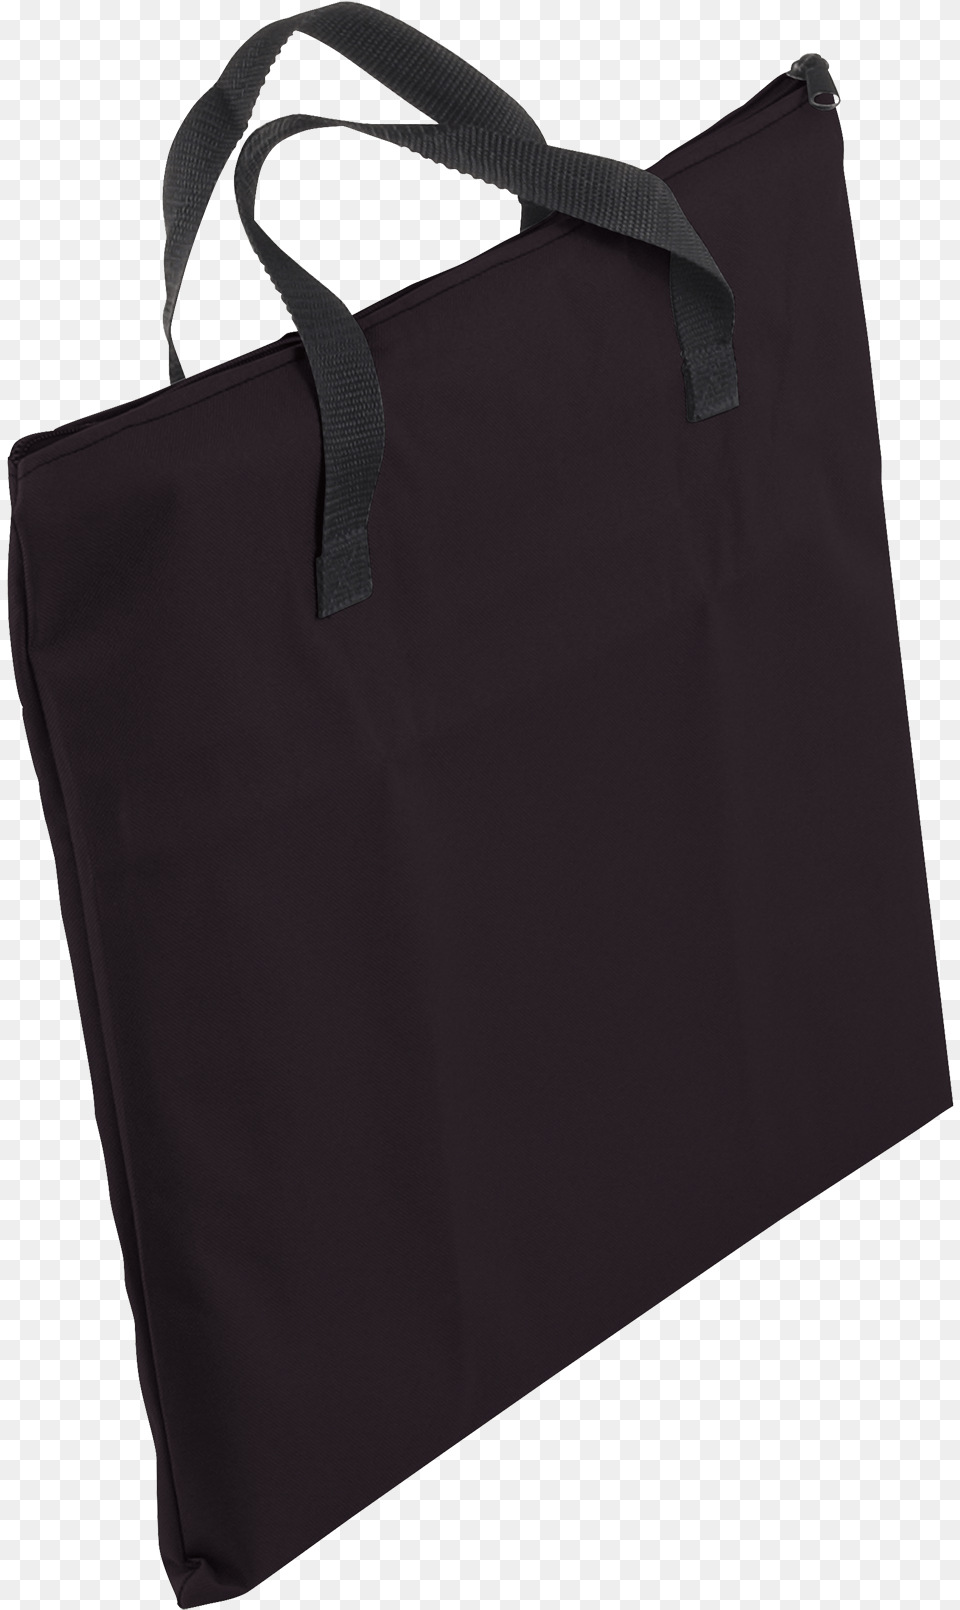 Black Carry Bag, Tote Bag, Accessories, Handbag, Shopping Bag Free Transparent Png